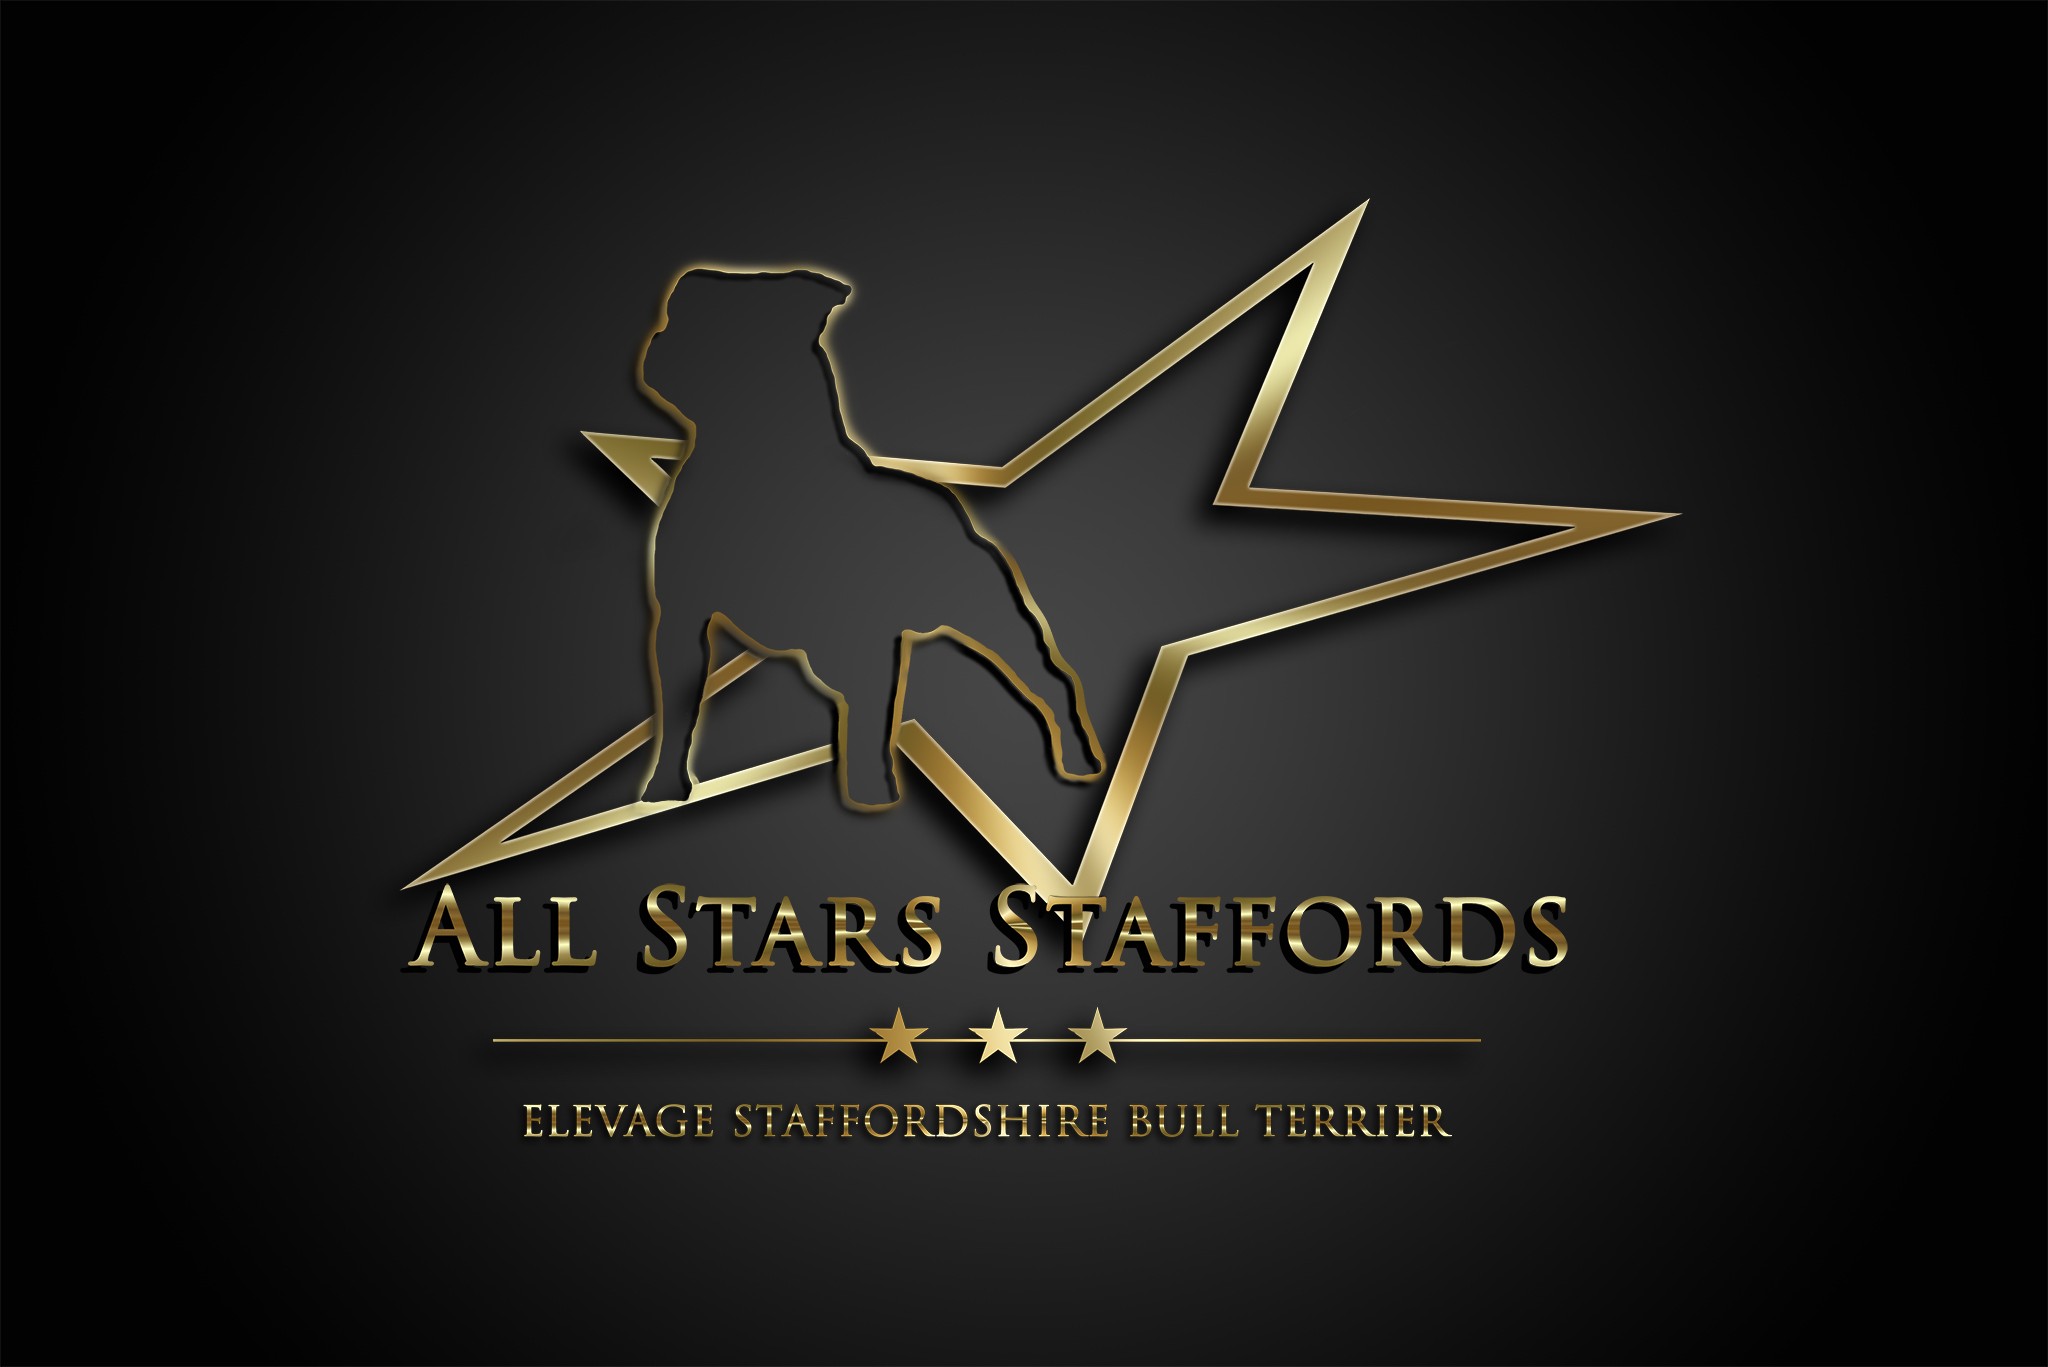 All Stars Staffords